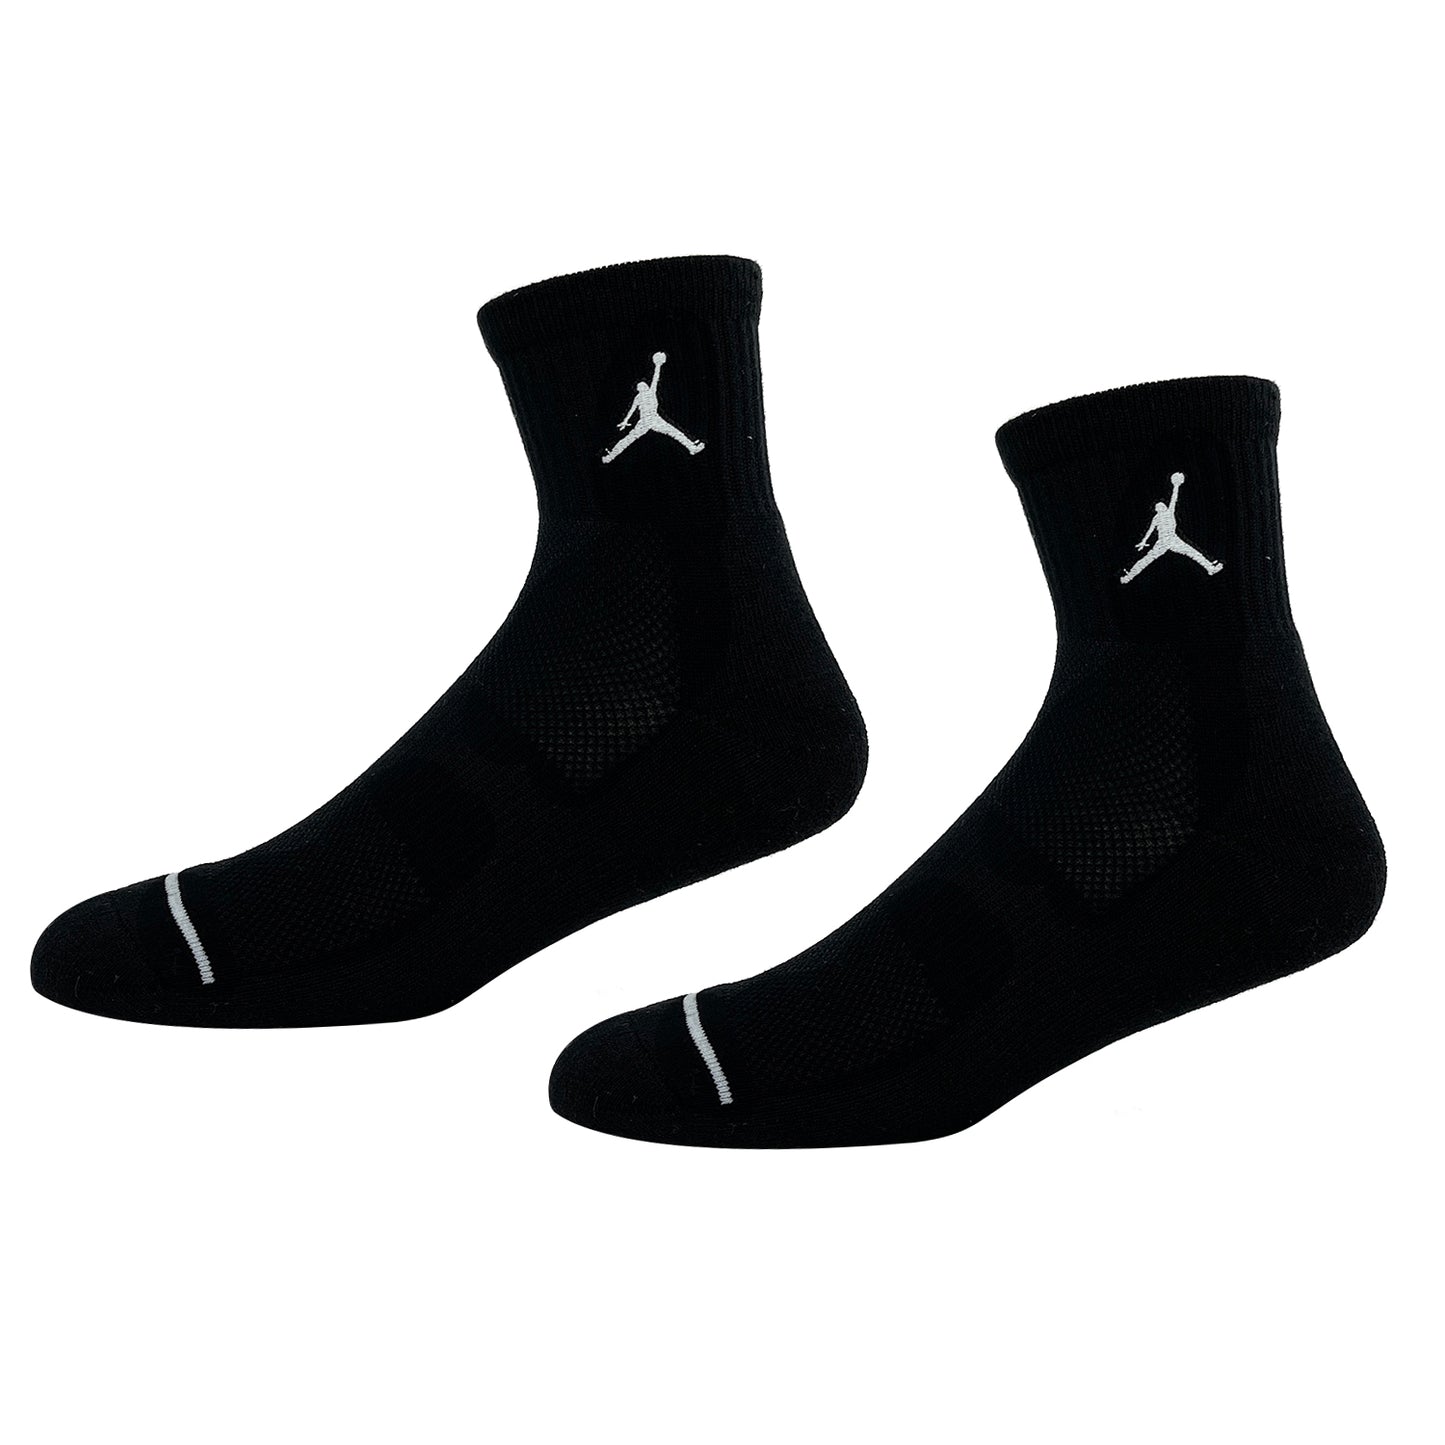 Jordan Black Ankle Socks